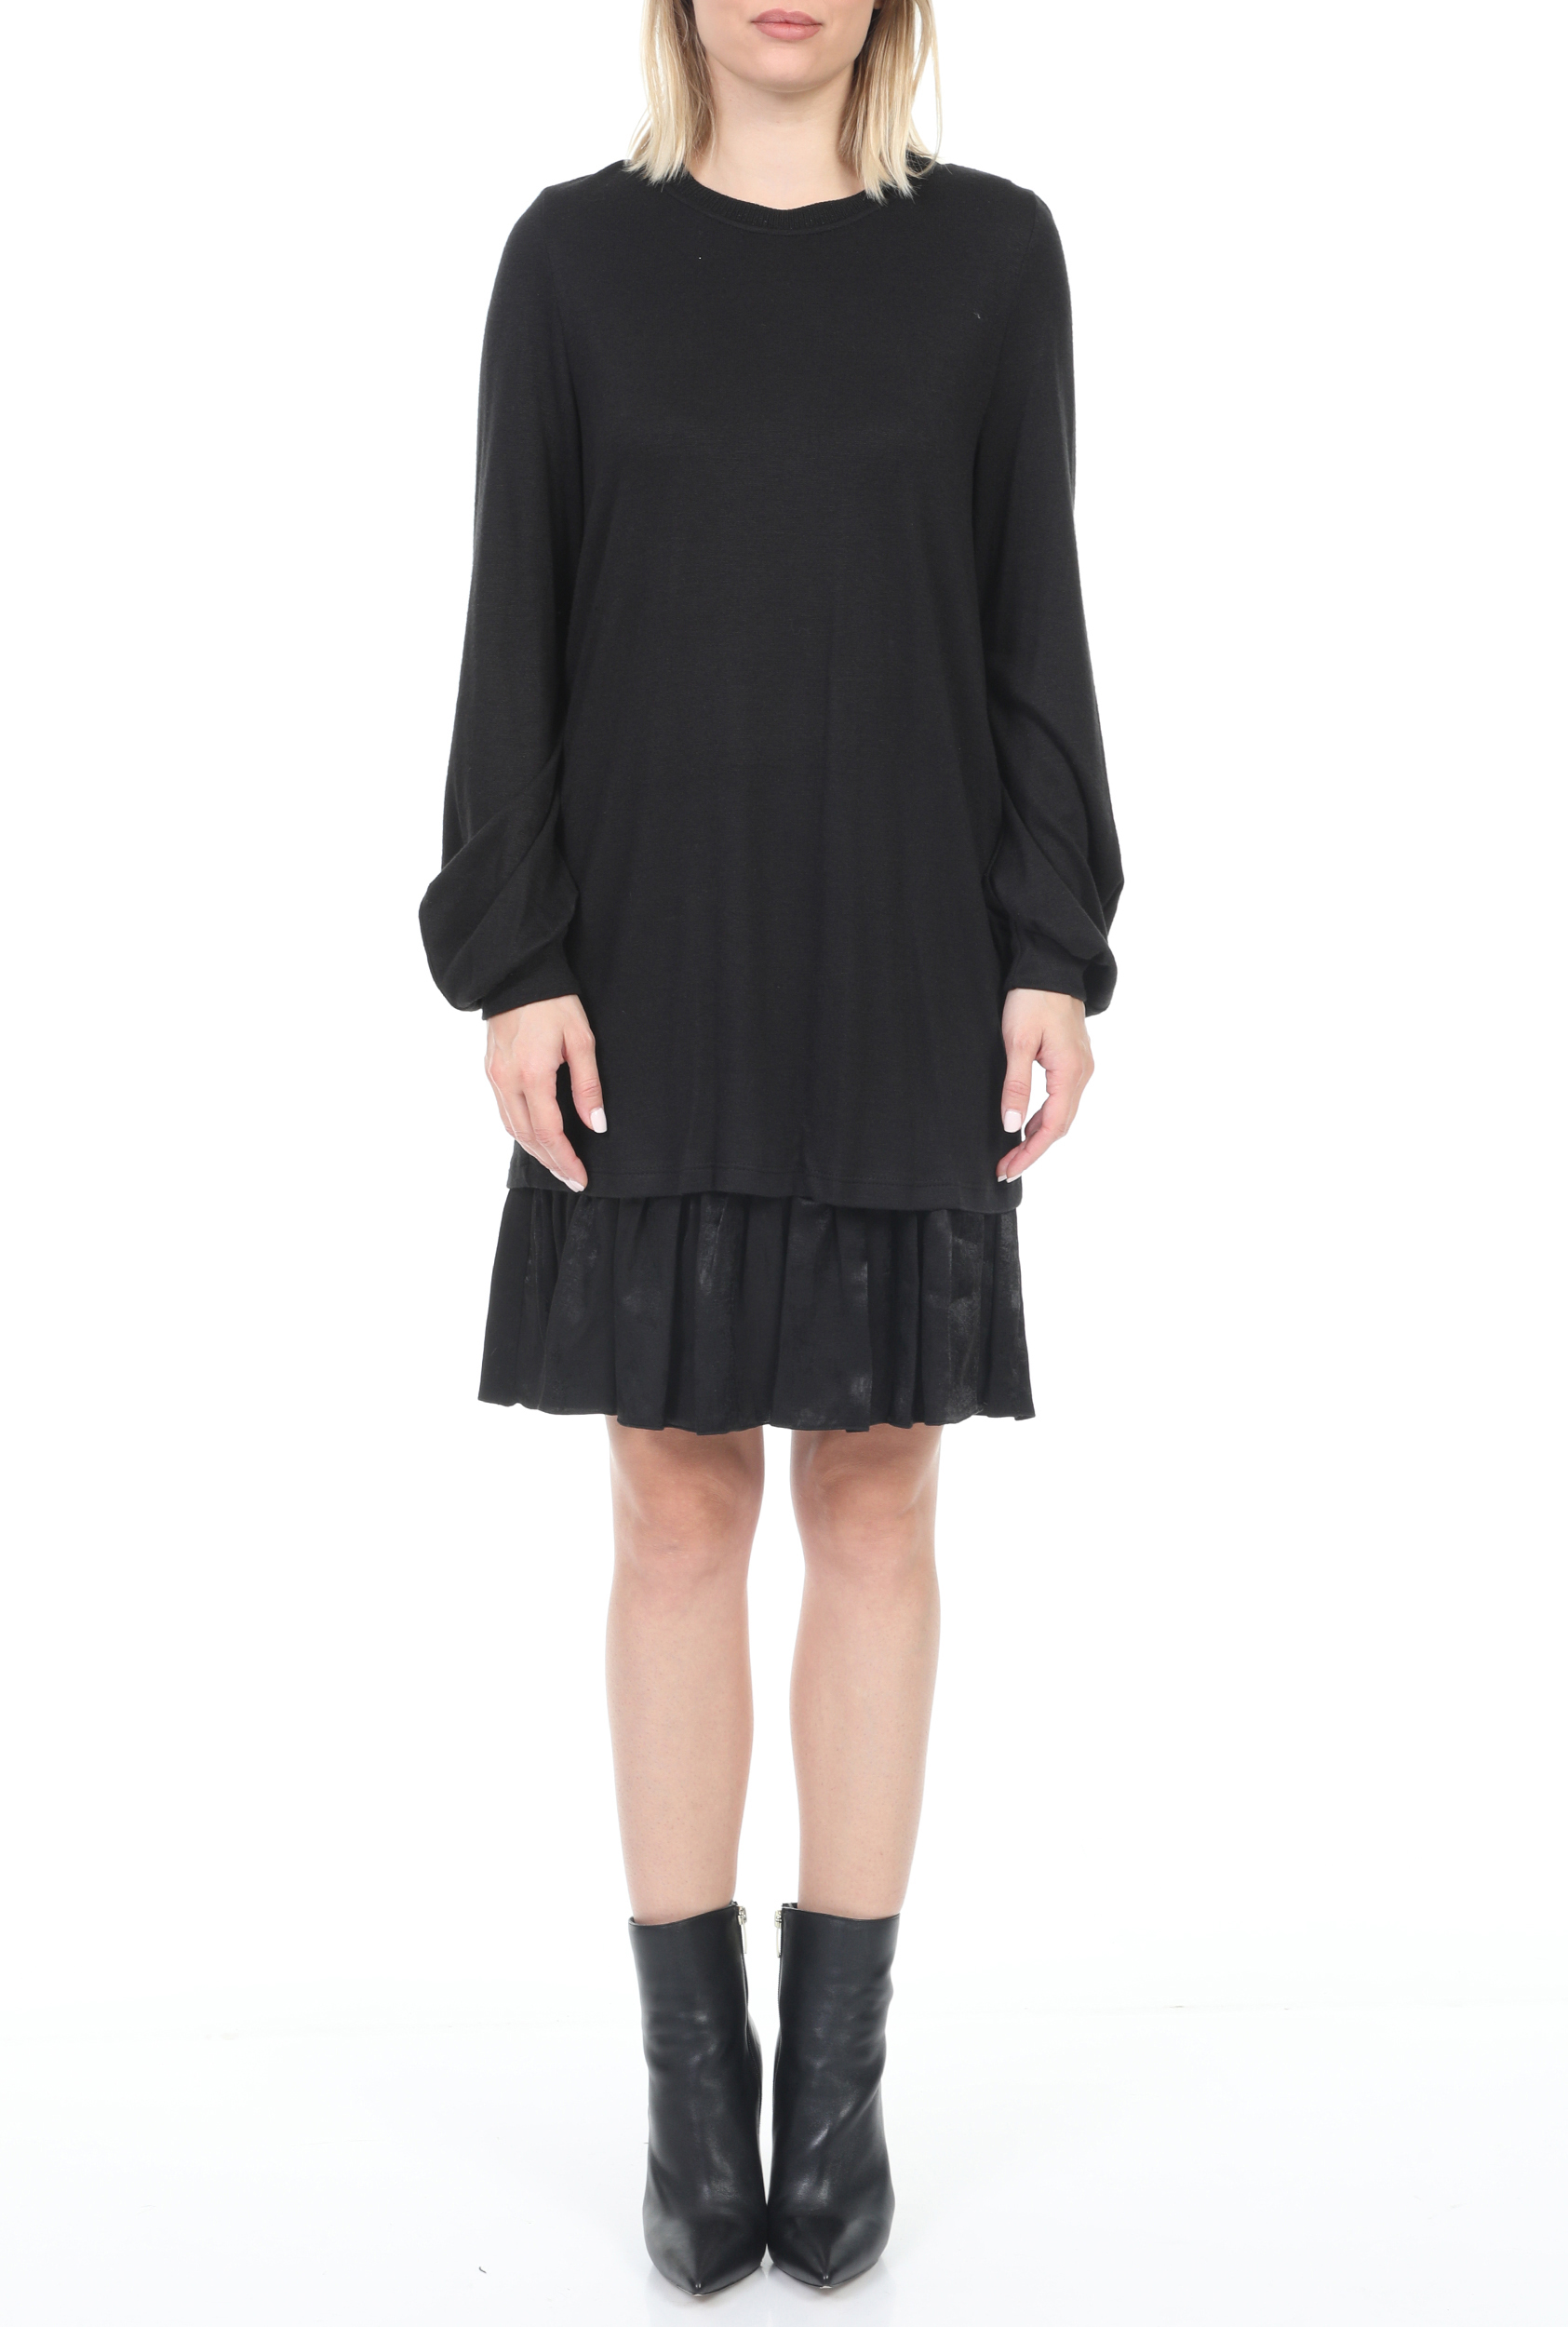 KOCCA – Γυναικειο mini φορεμα KOCCA HEROICA μαυρο